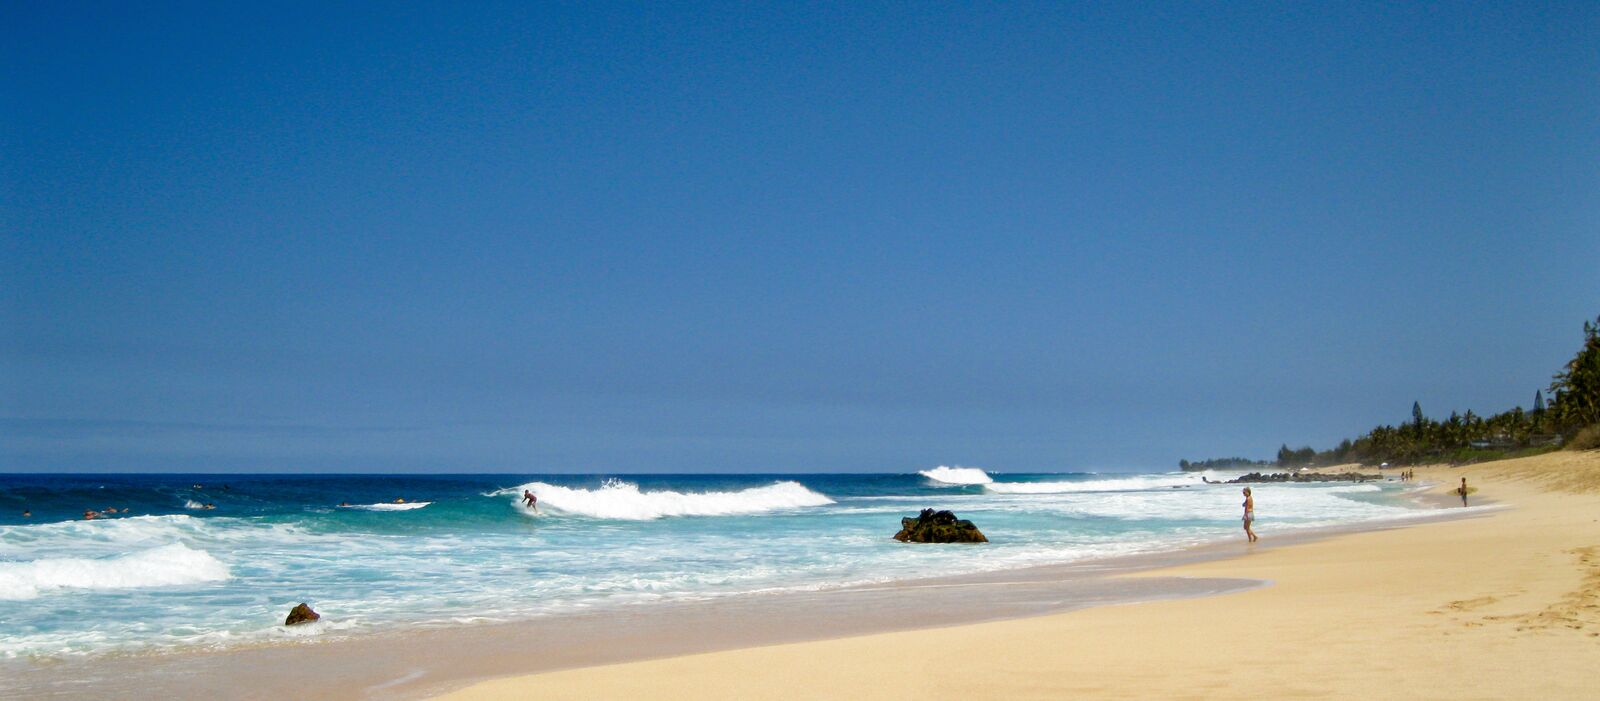 Ein Strand an der NordkÃ¼ste der hawaiischen Insel O'ahu